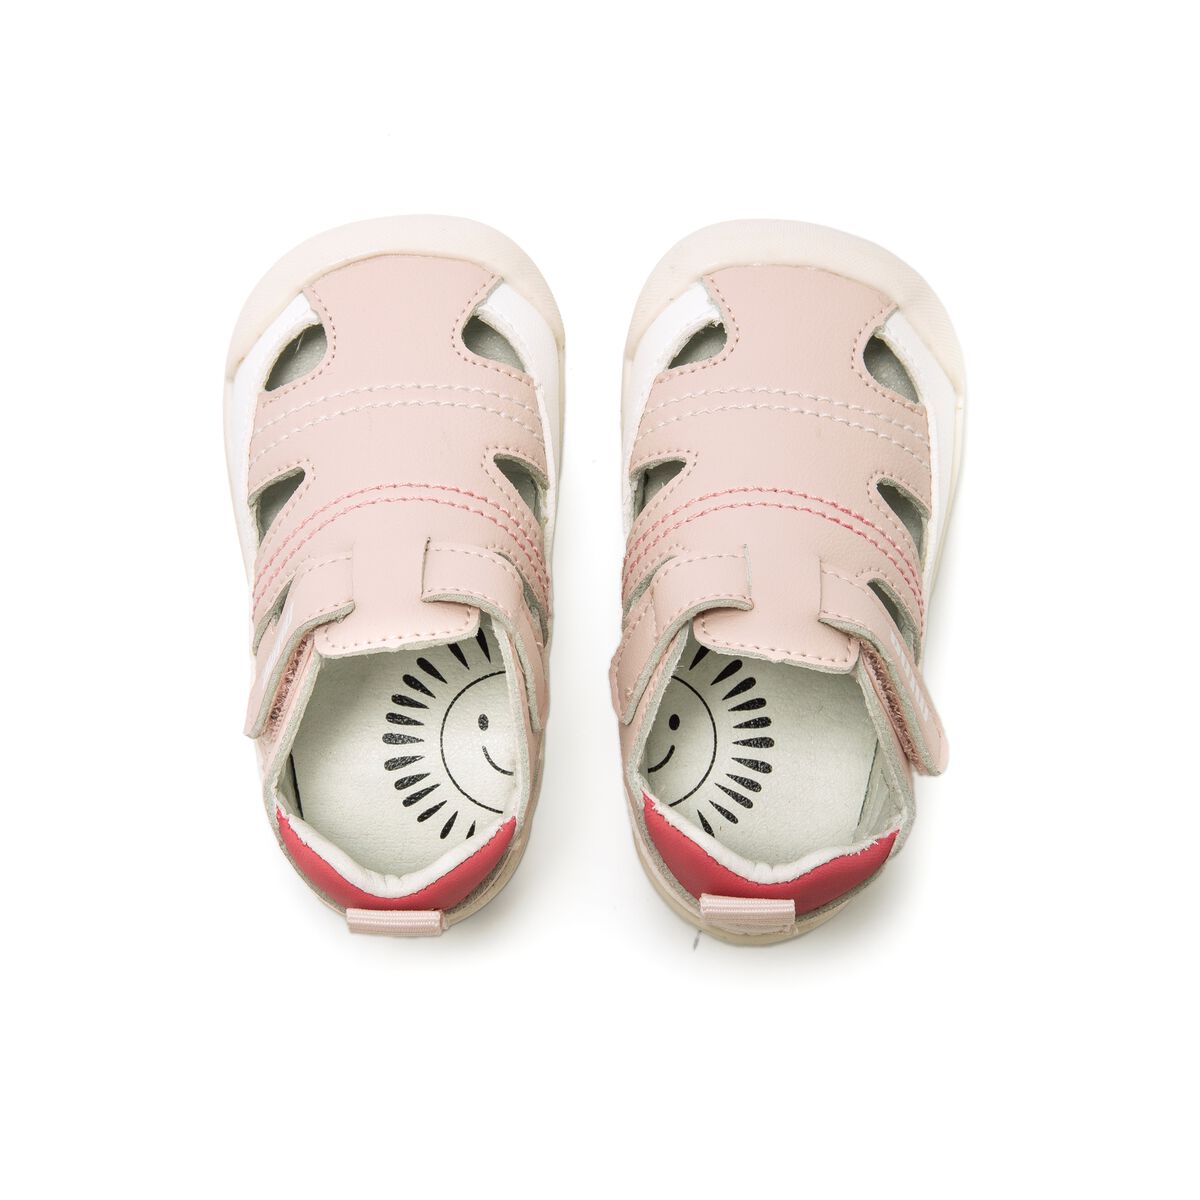 Sneakers de Rapariga modelo FREE BABY de MTNG image number 6